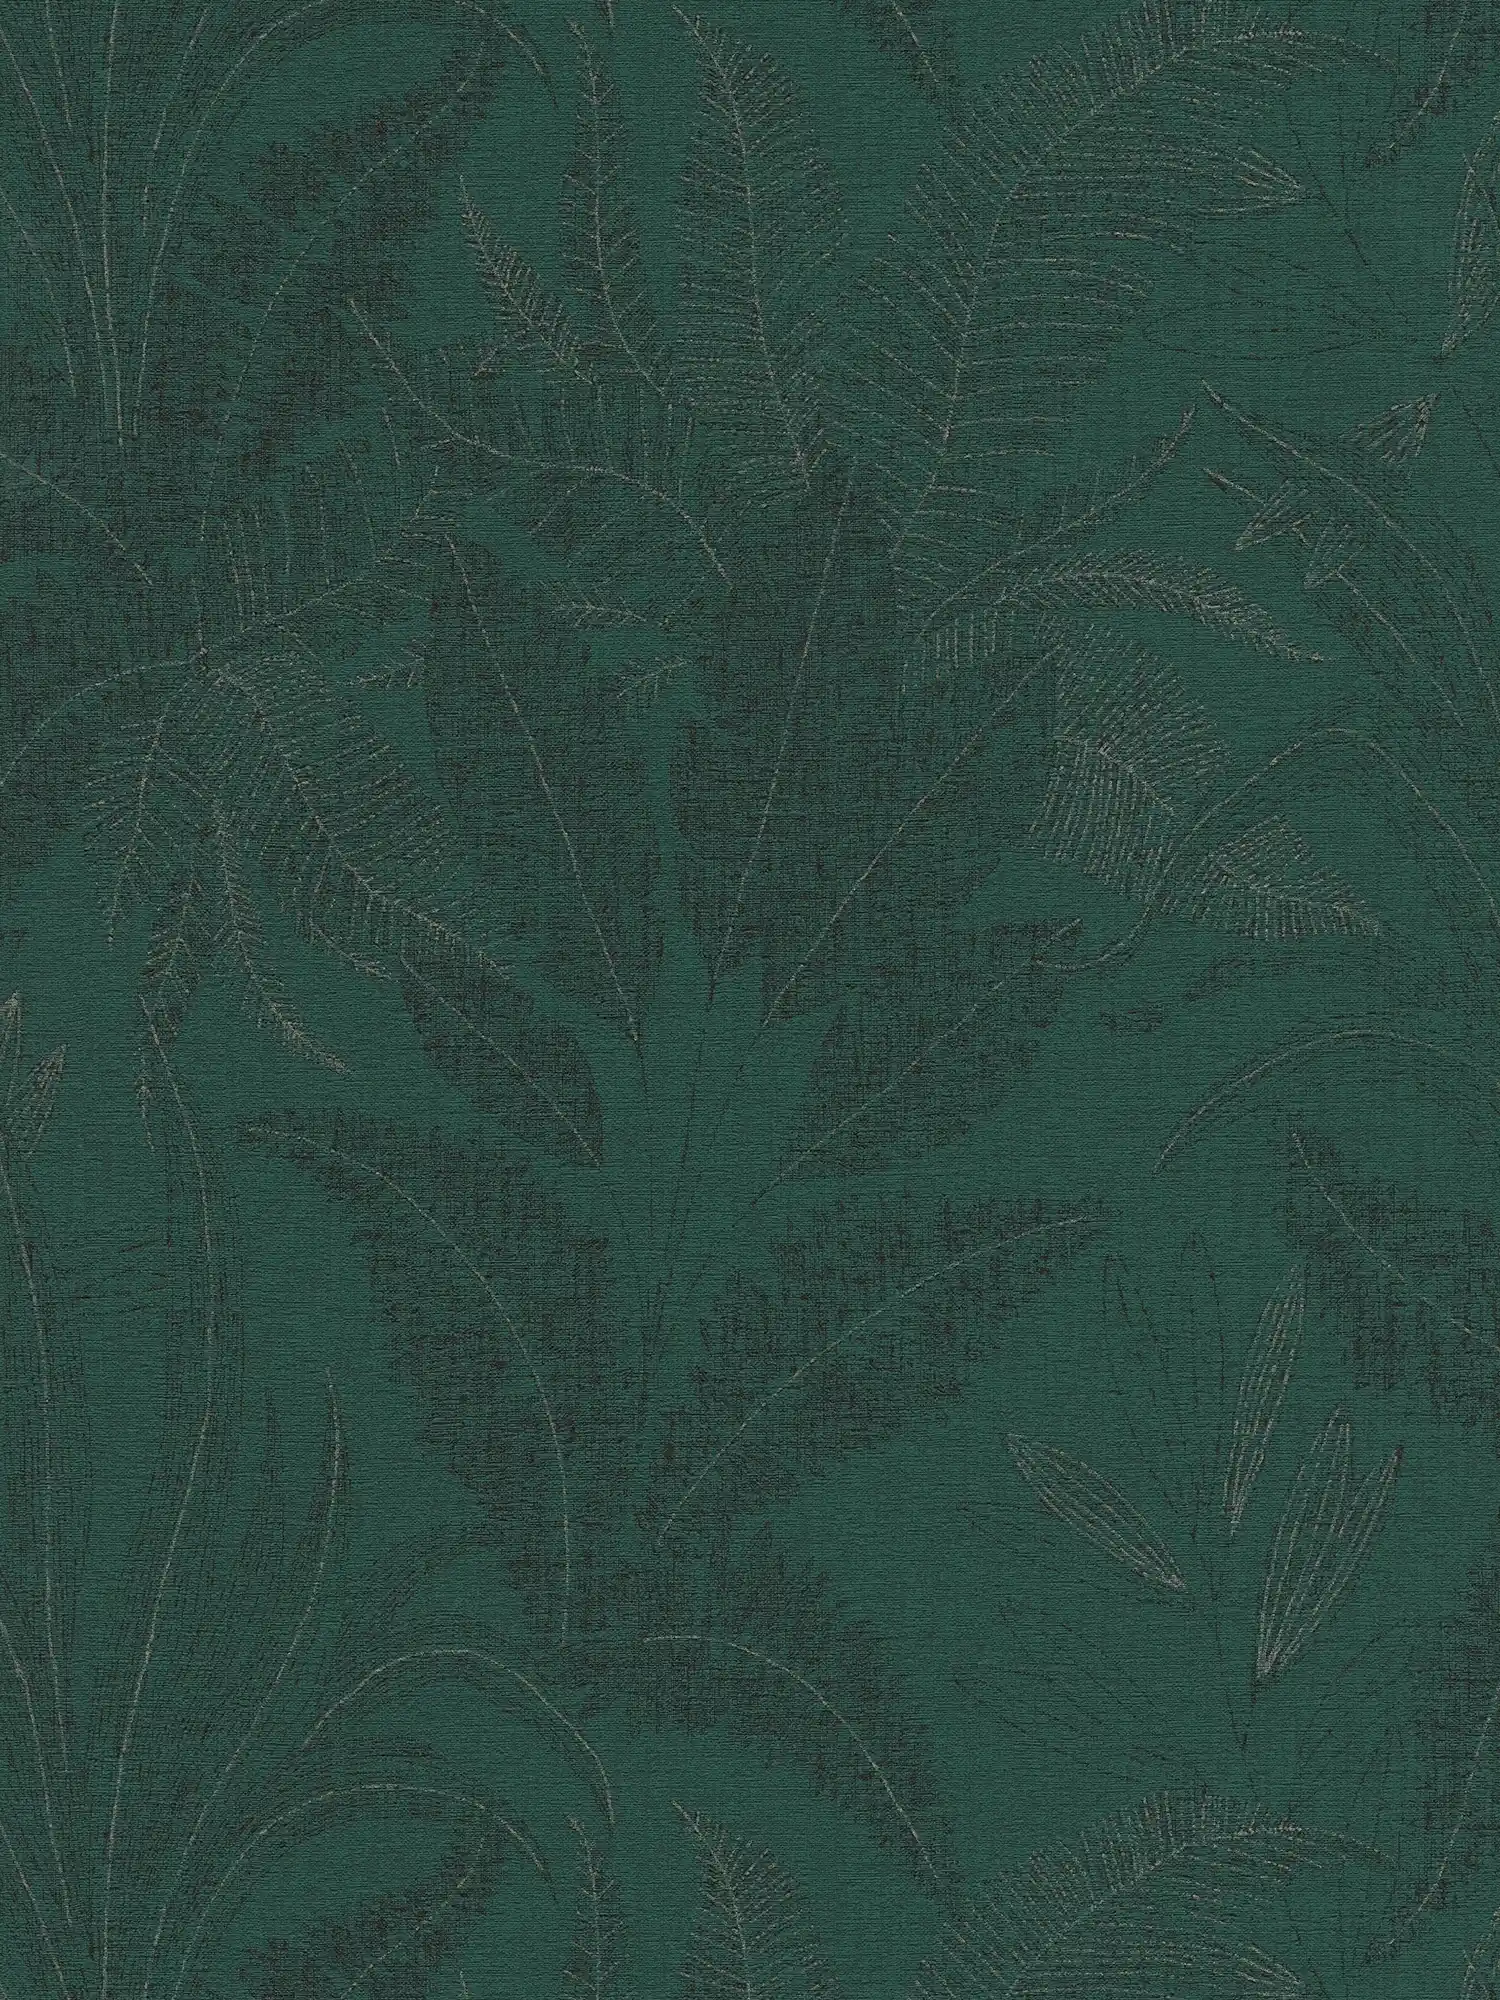 Wallpaper with jungle pattern lightly textured - green, dark green, black
